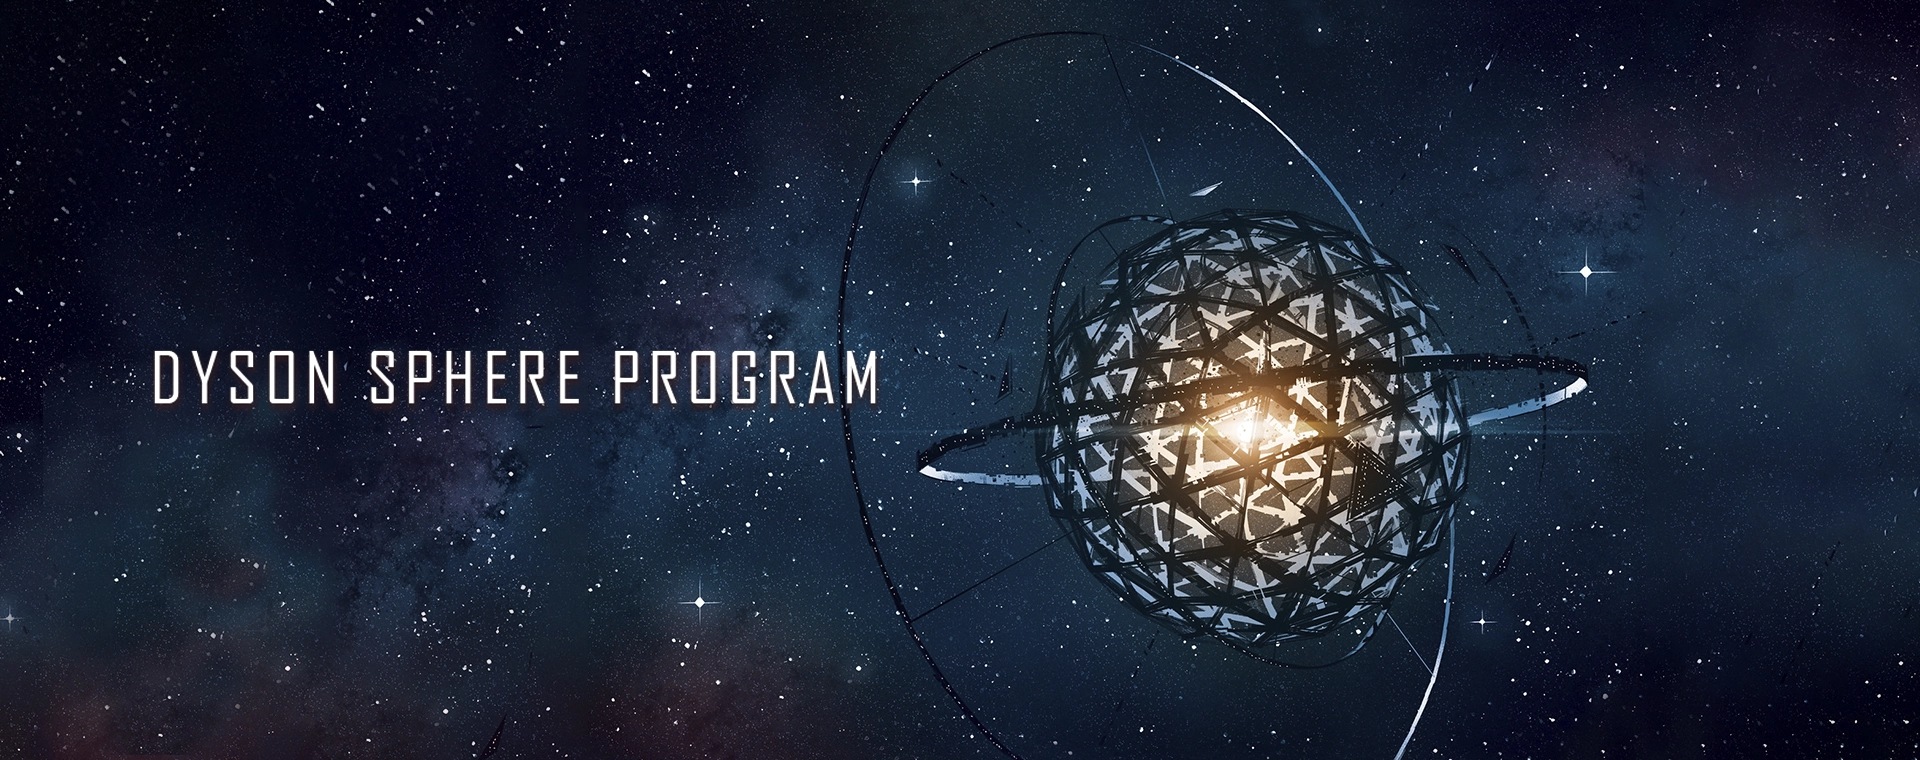 Dyson sphere program